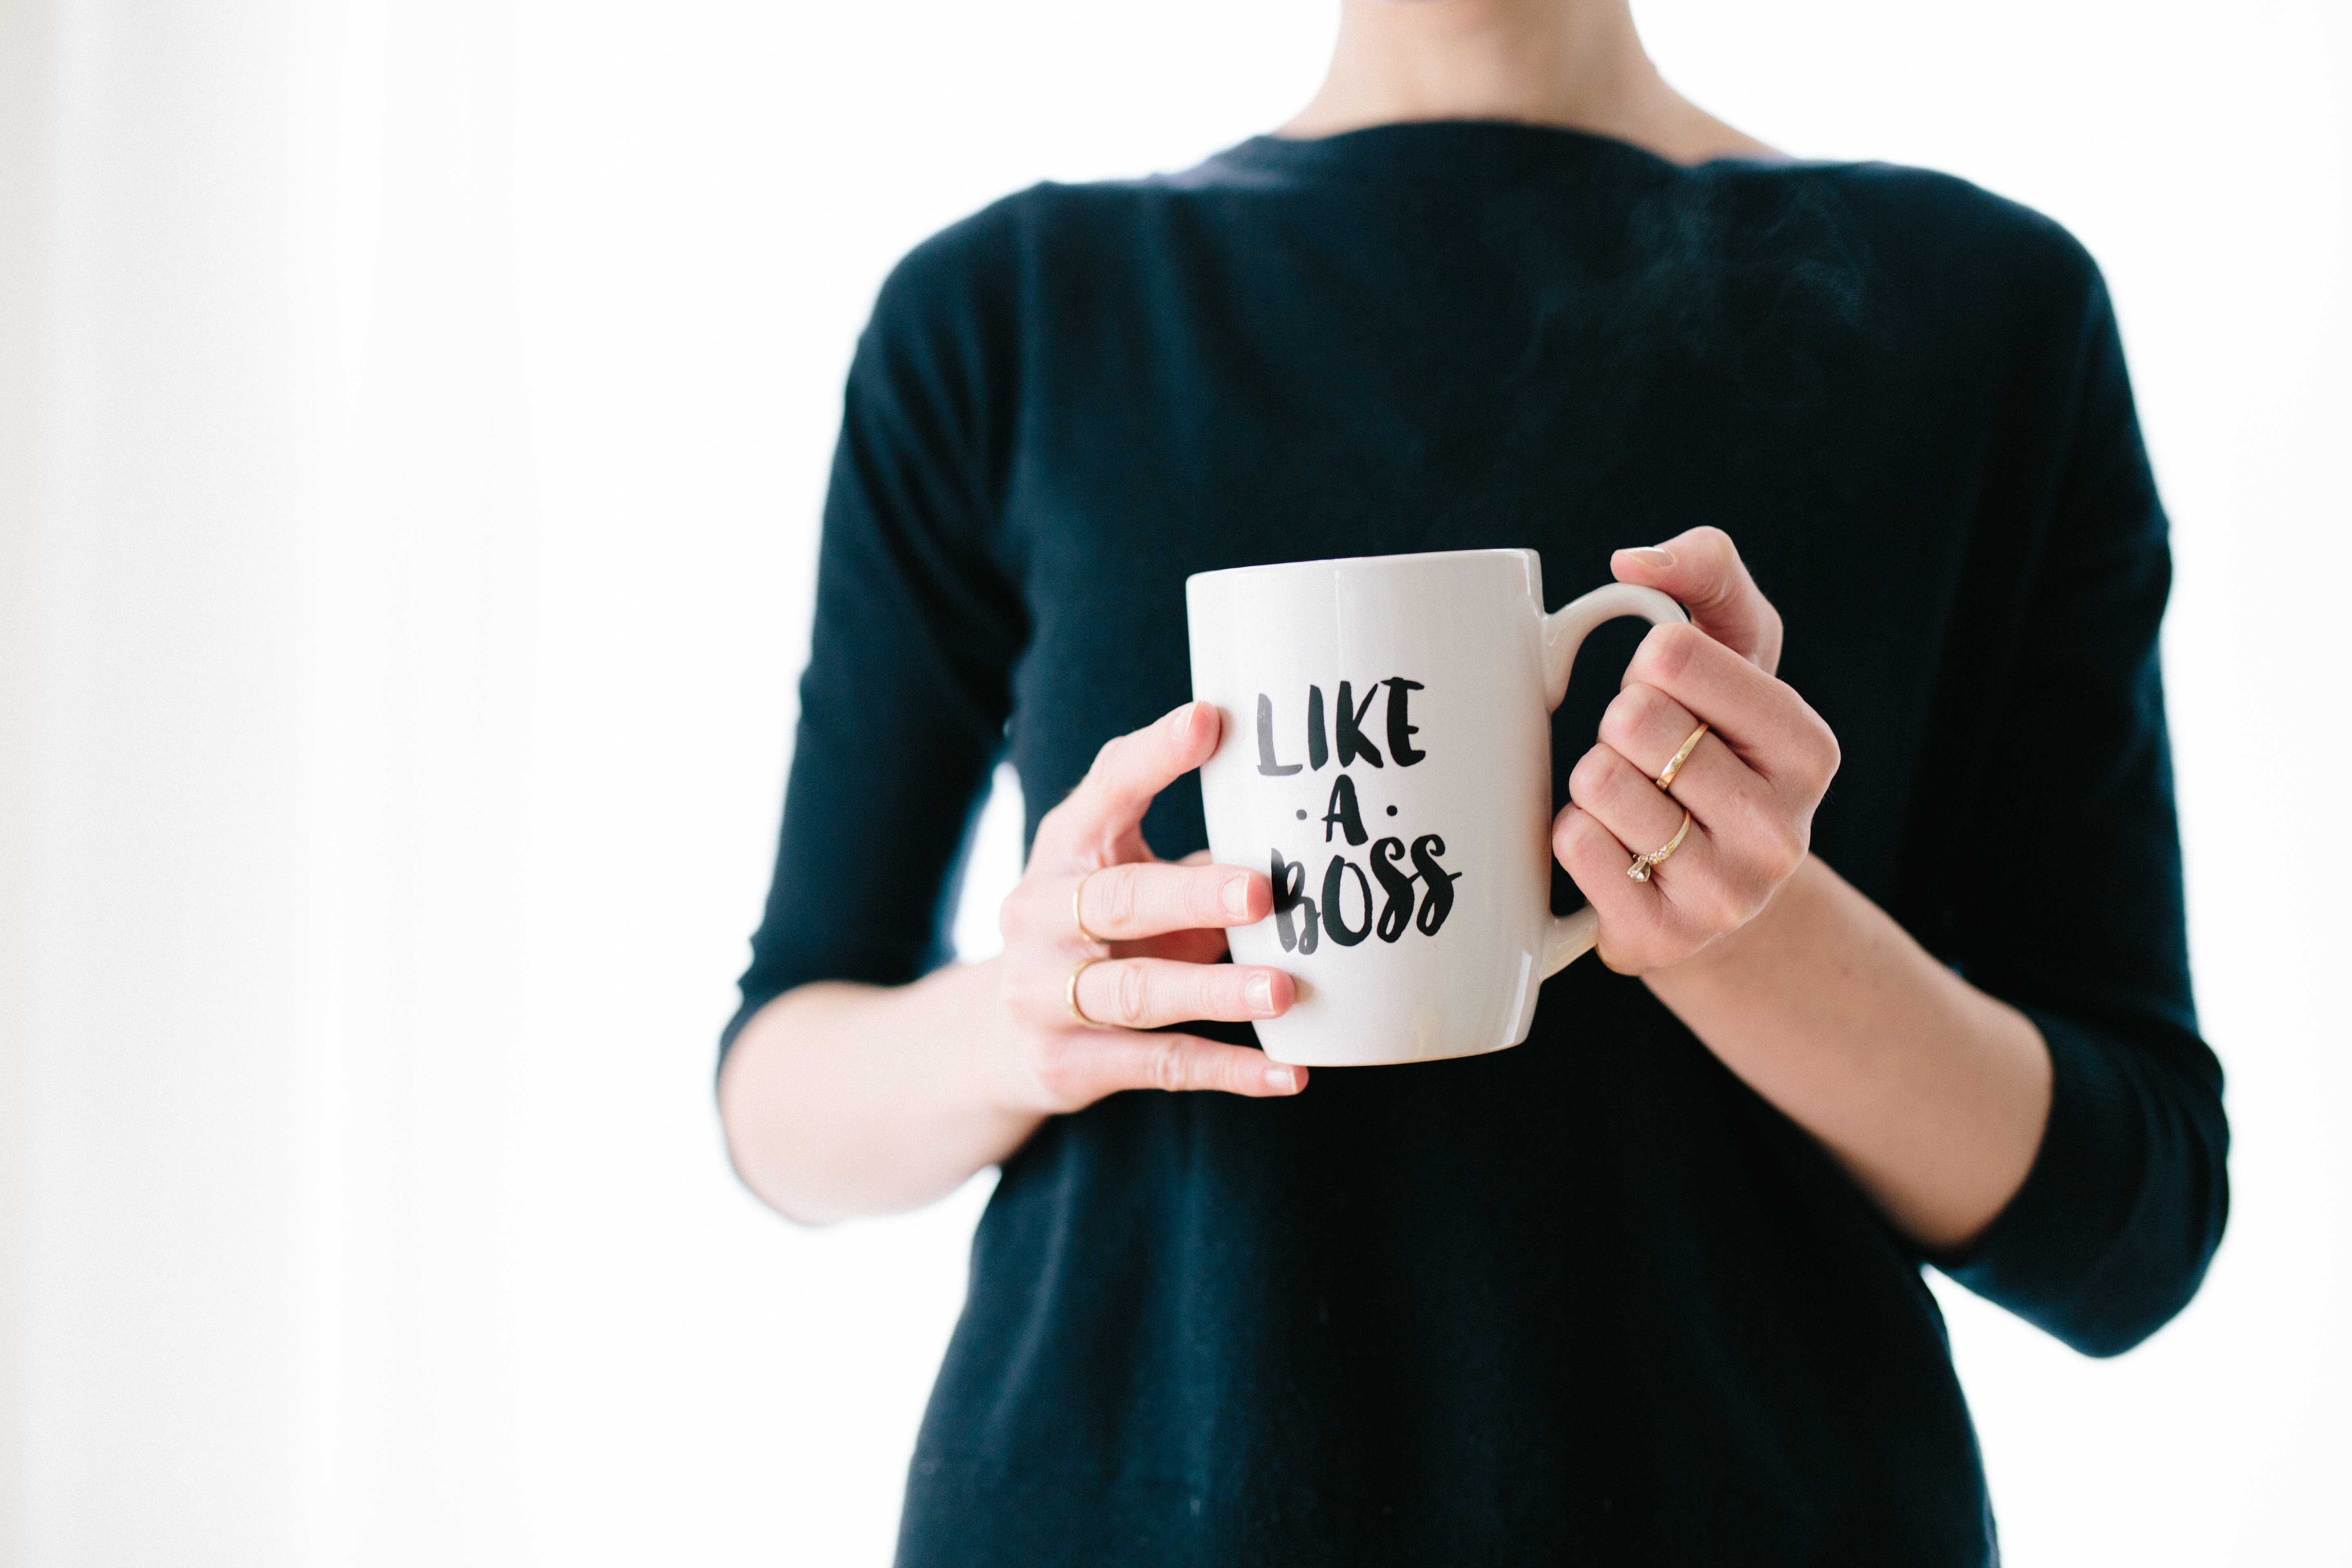 Woman wearing black top and holding a coffee mug that reads “Like a Boss.” Image by Brooke Lark, via Unsplash.com.